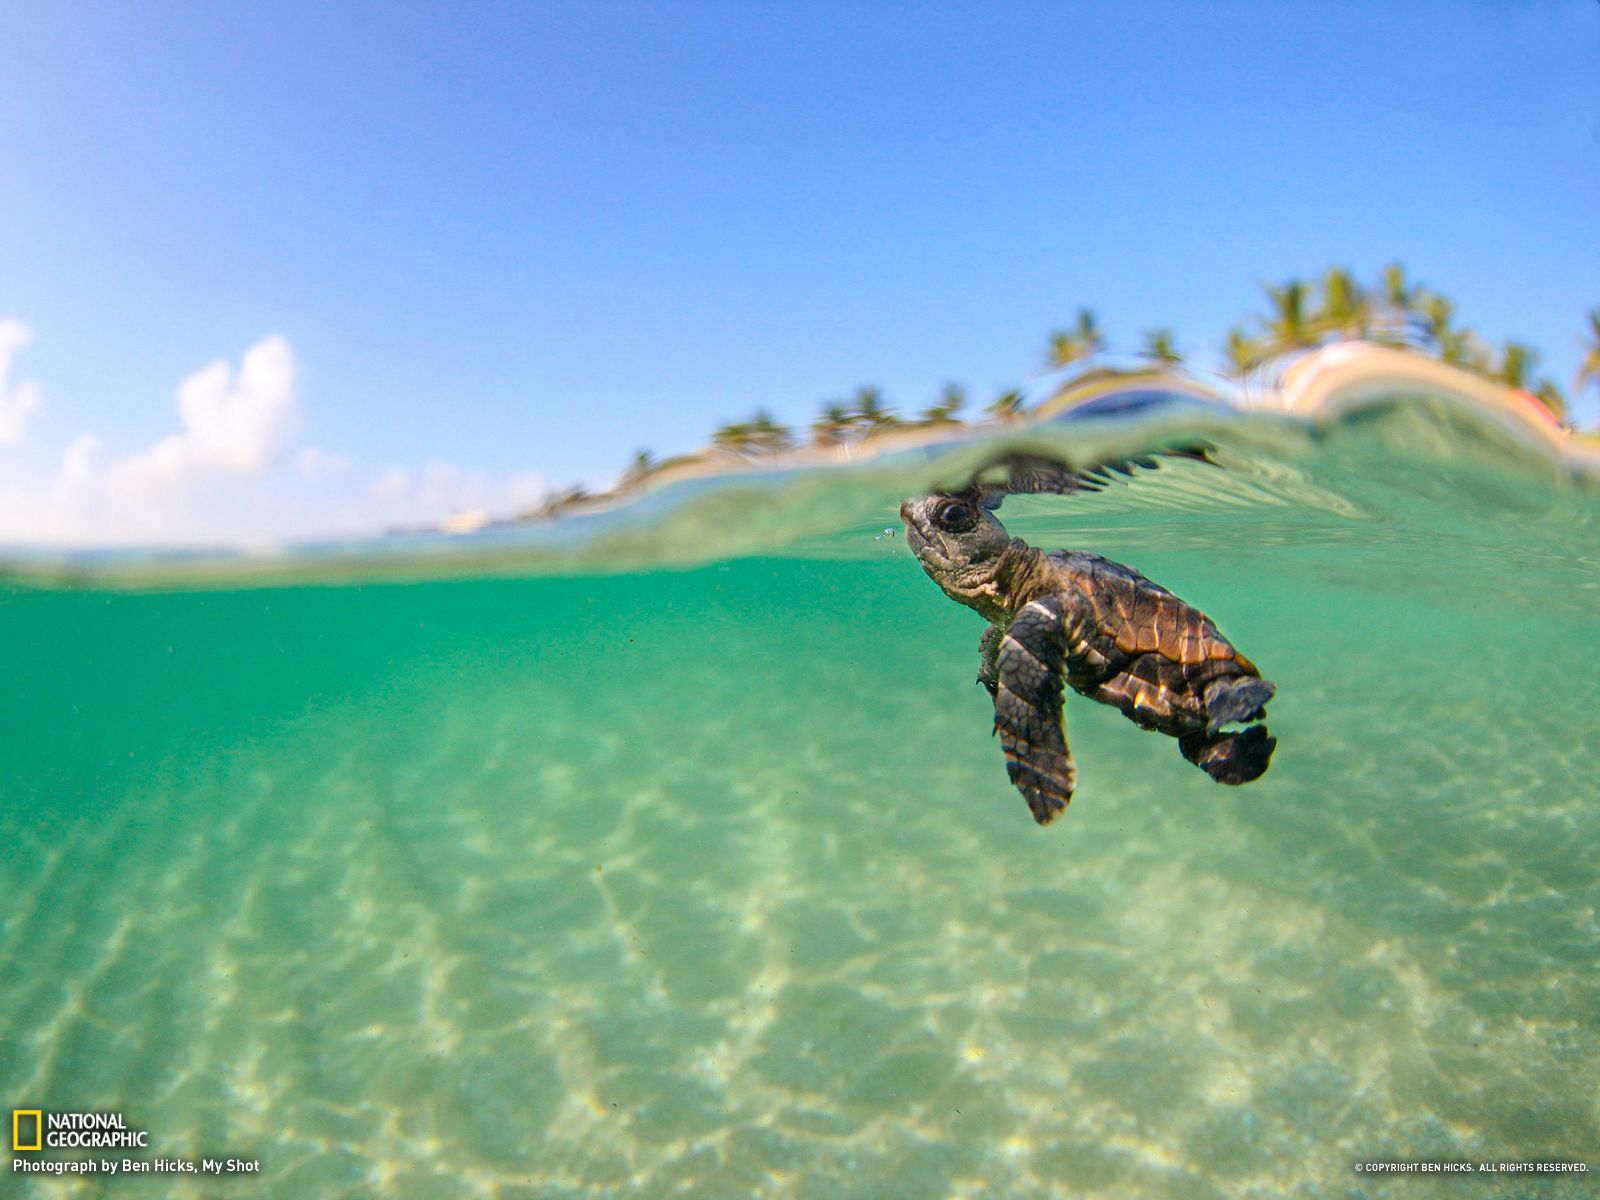 A turtle swimming in the ocean - Sea turtle, turtle